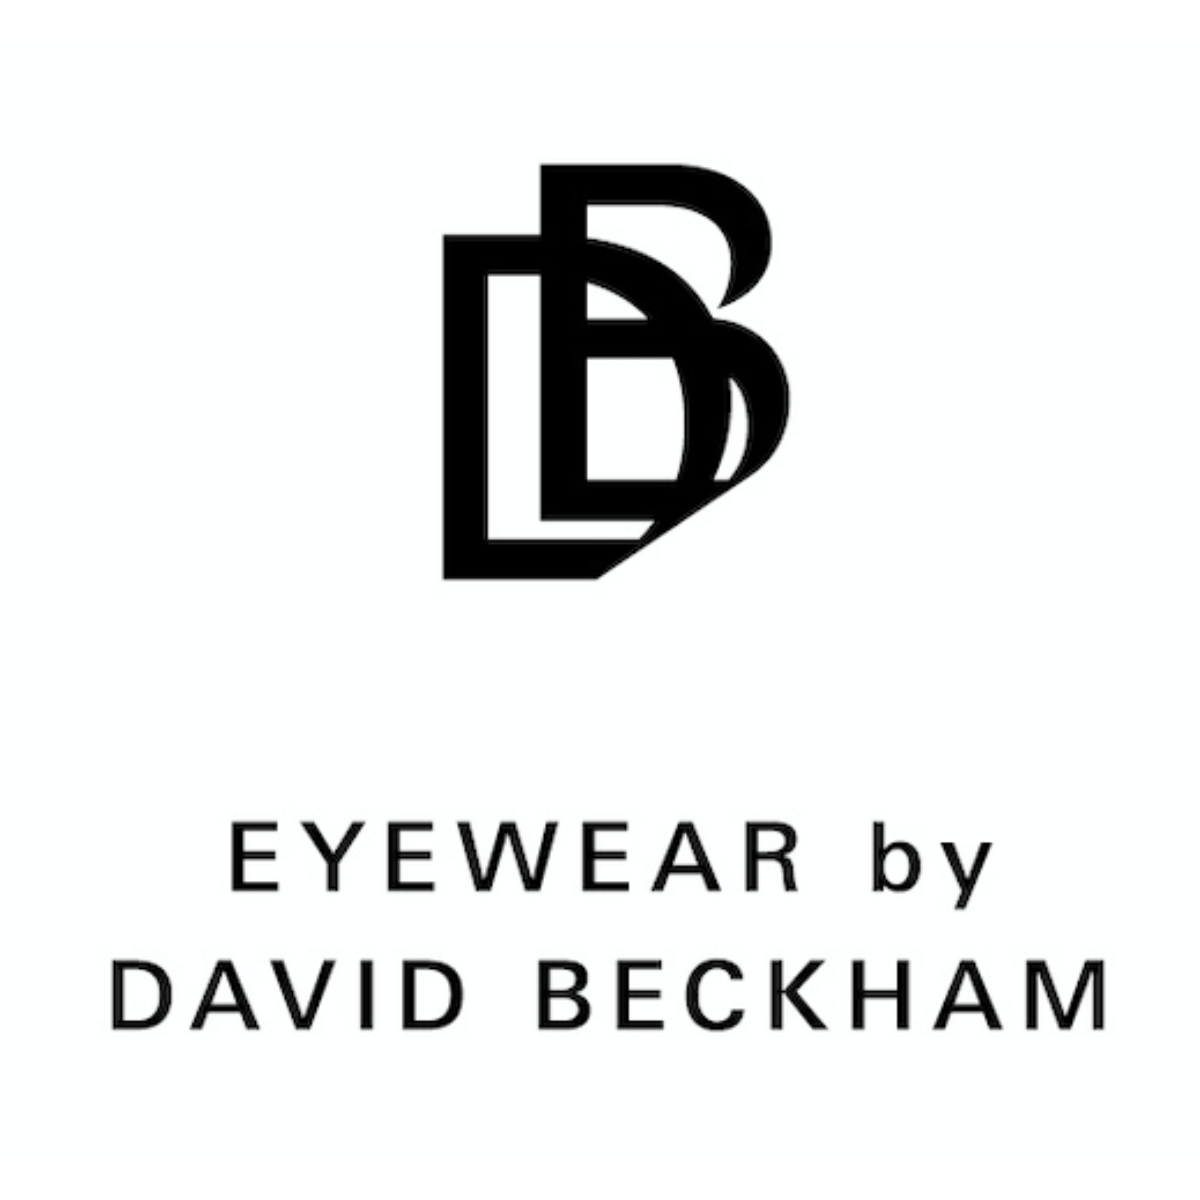 david beckham eyewear at optorium sunglsses and spectacles frmes for men and women"